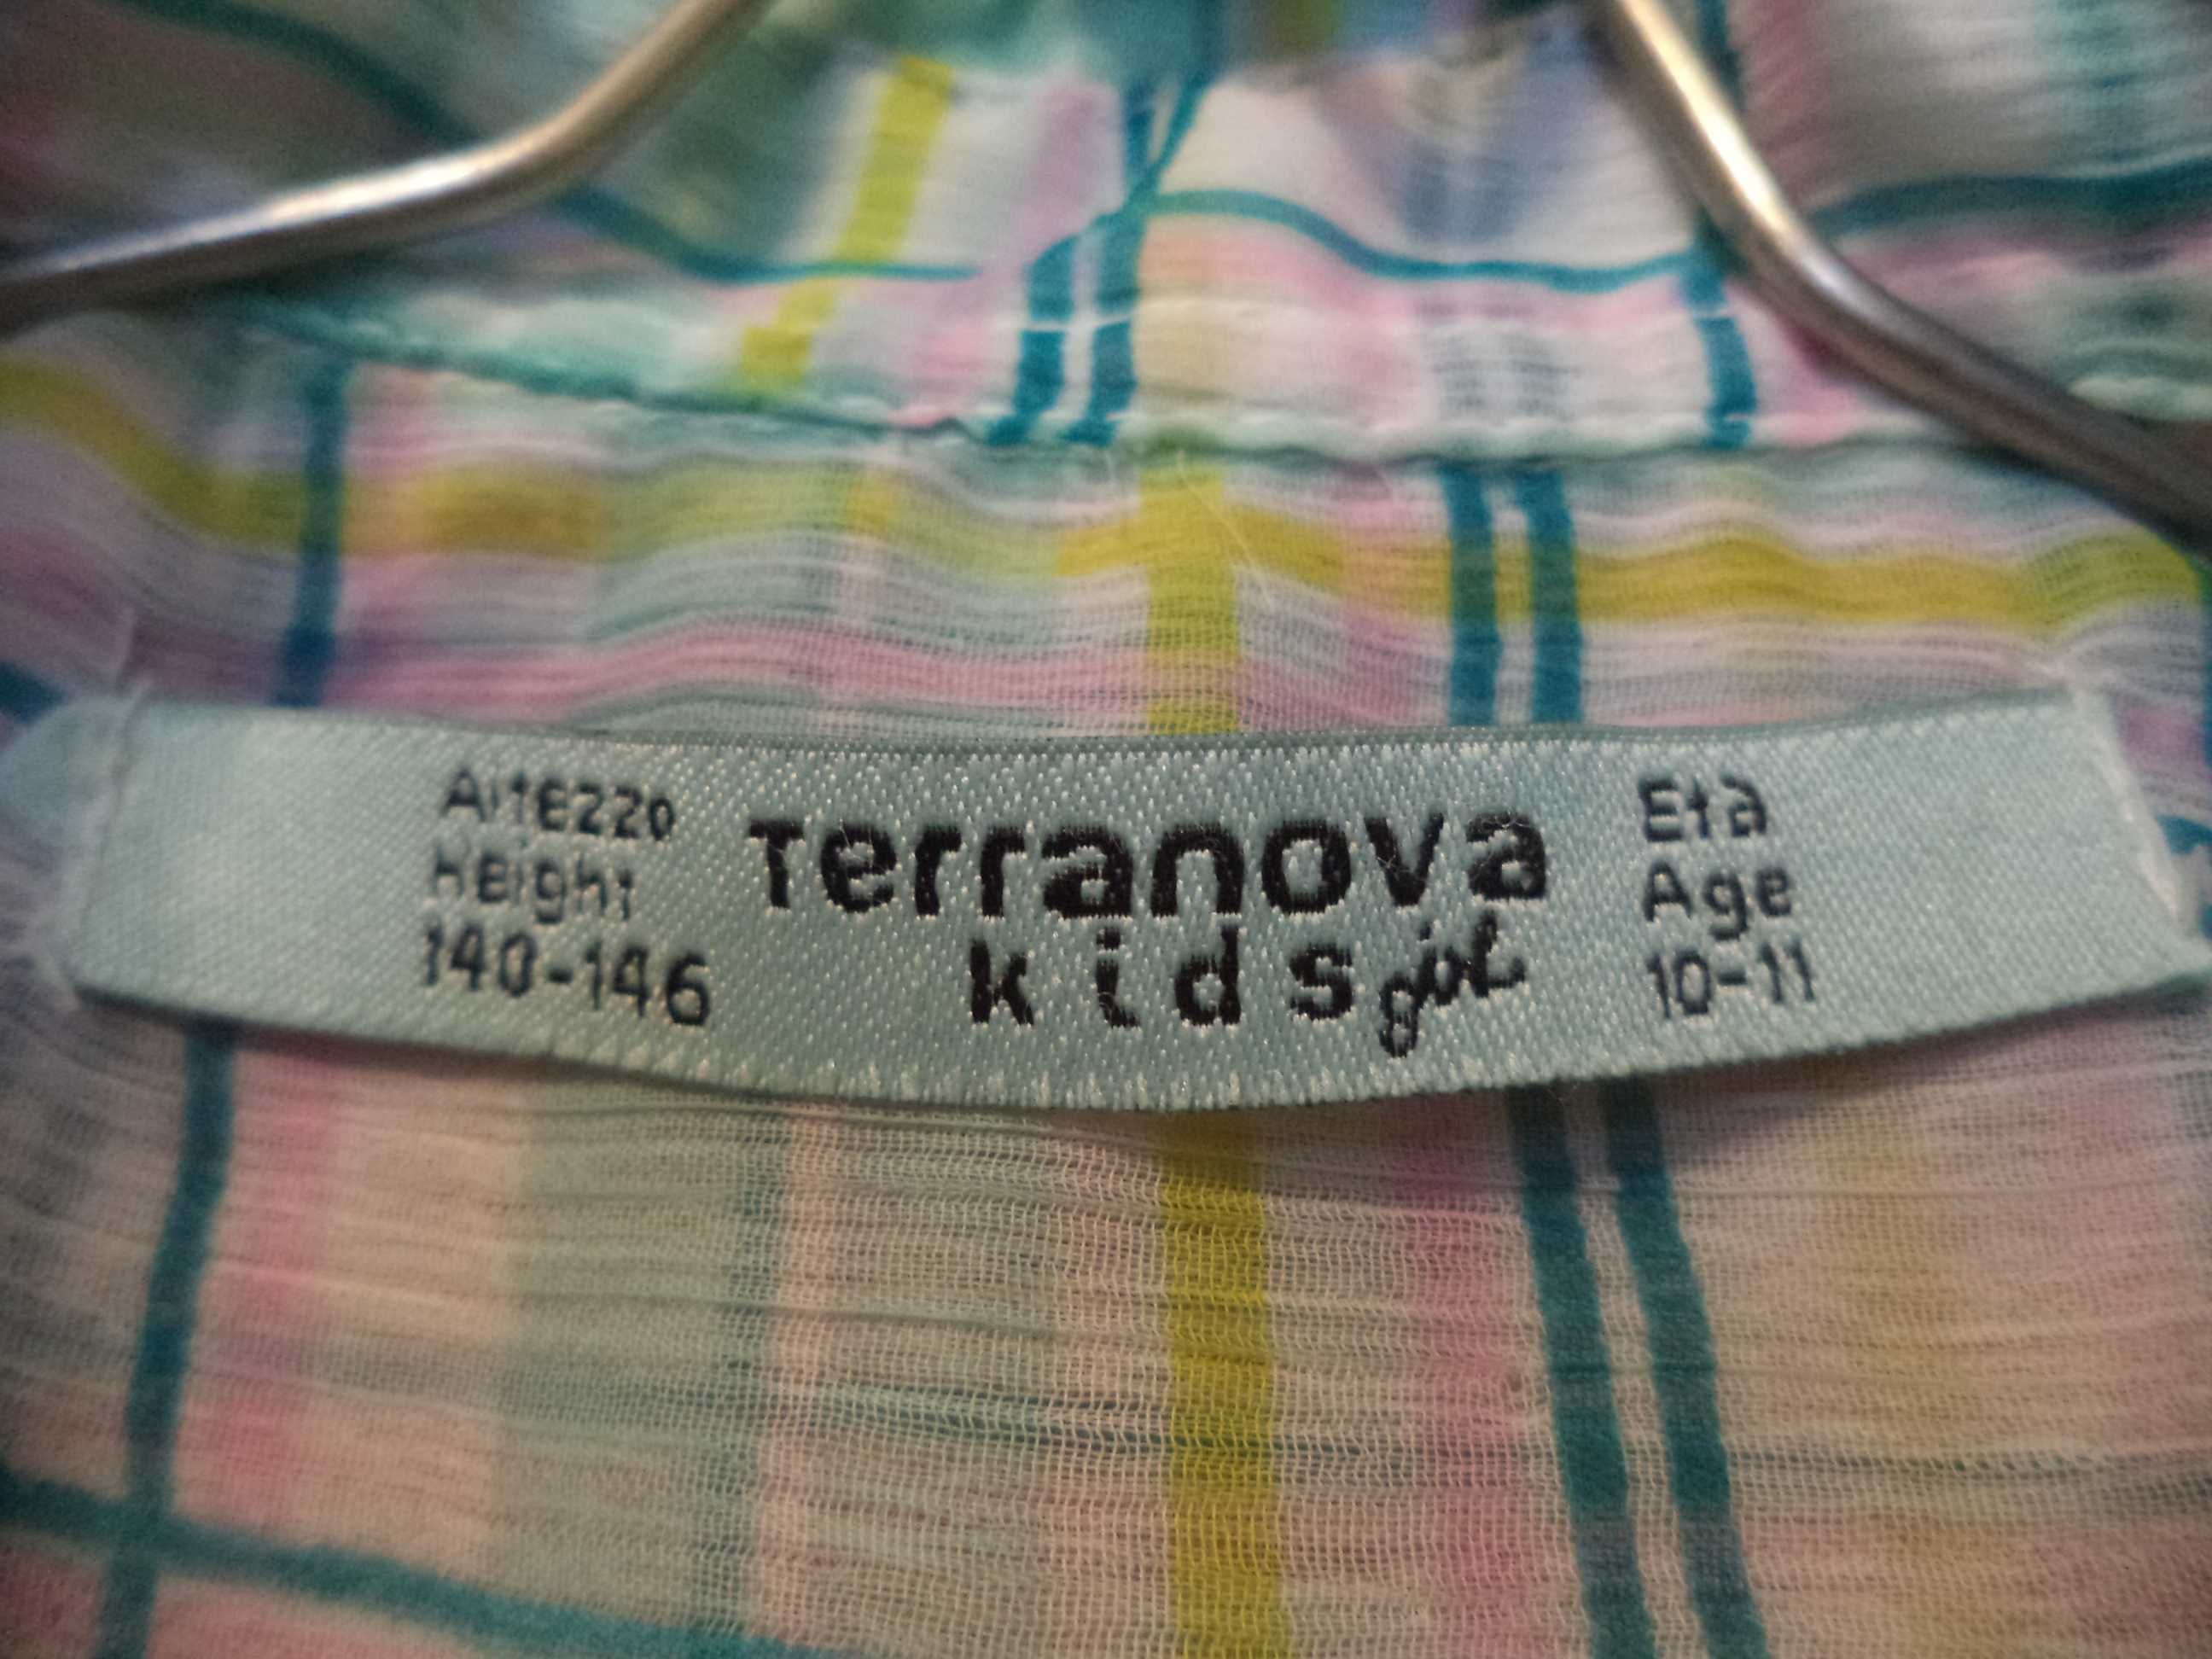 Блузки-рубашки на девочку 10-11 лет, рост 140-146см, новые,Terranova